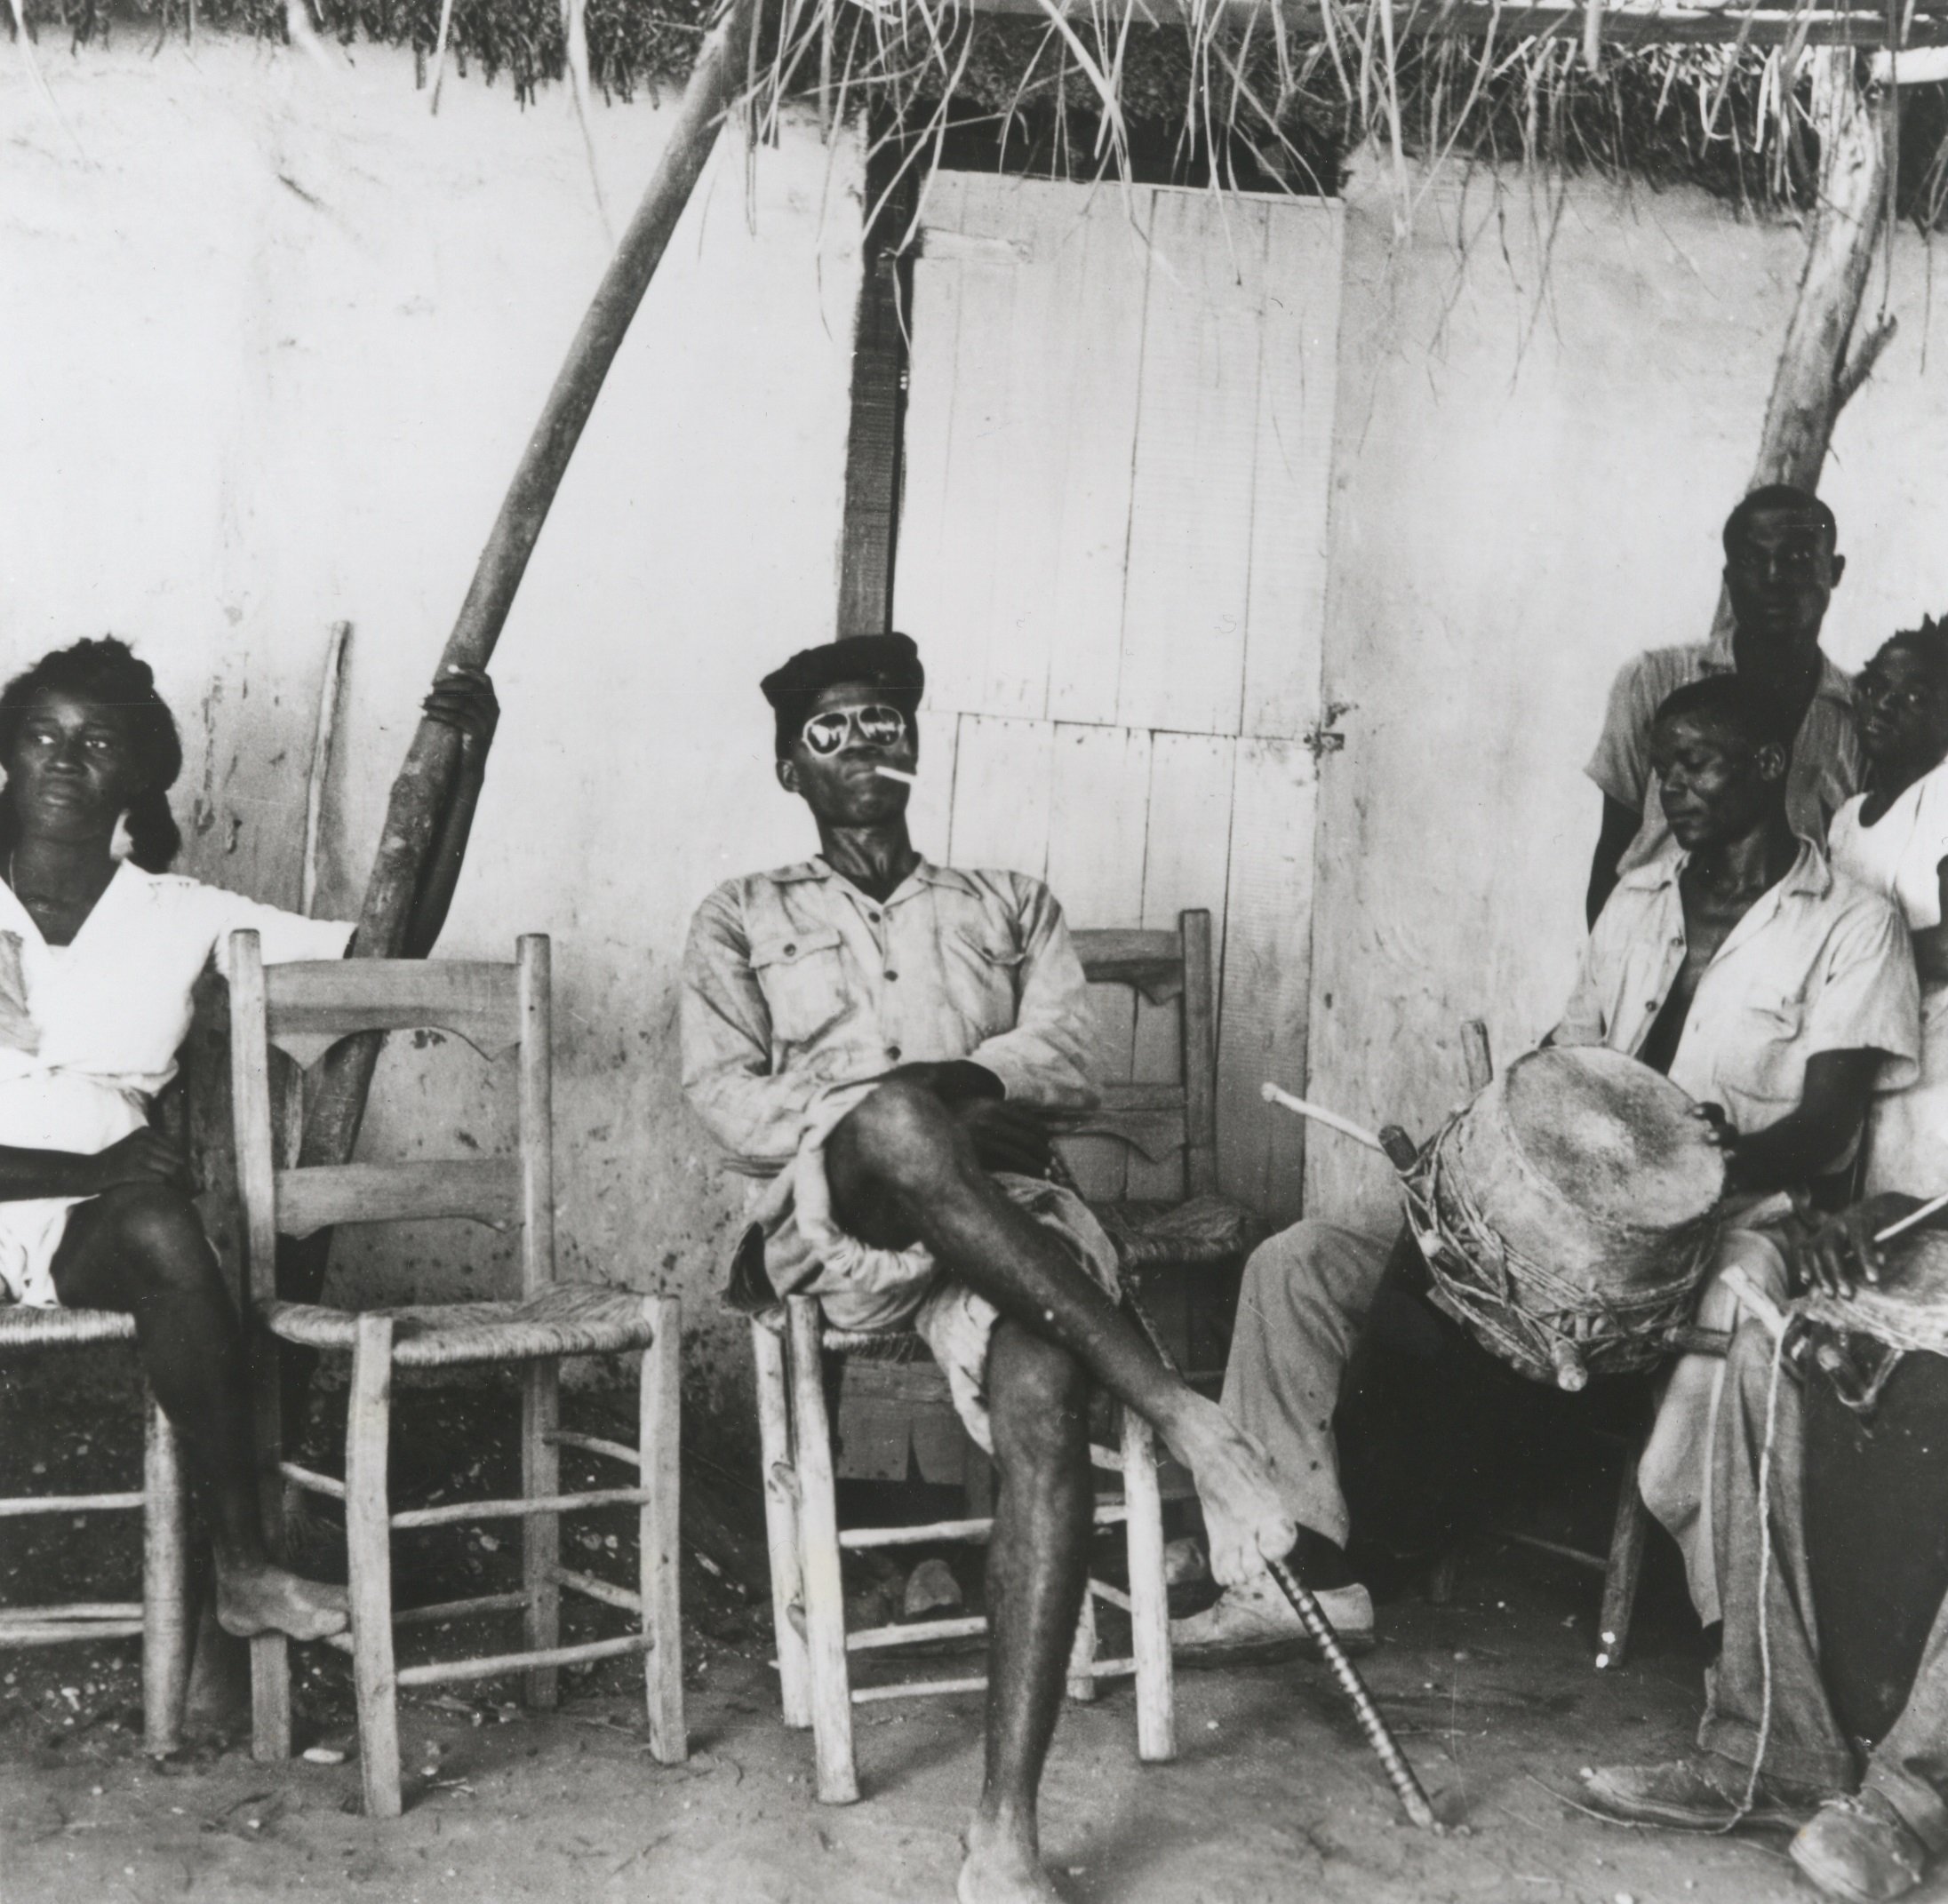  Fot. z filmu “Divine Horsemen – the Living Gods of Haïti”, reż. Cherel Ito, Teiji Ito, Maya Deren, 1985 